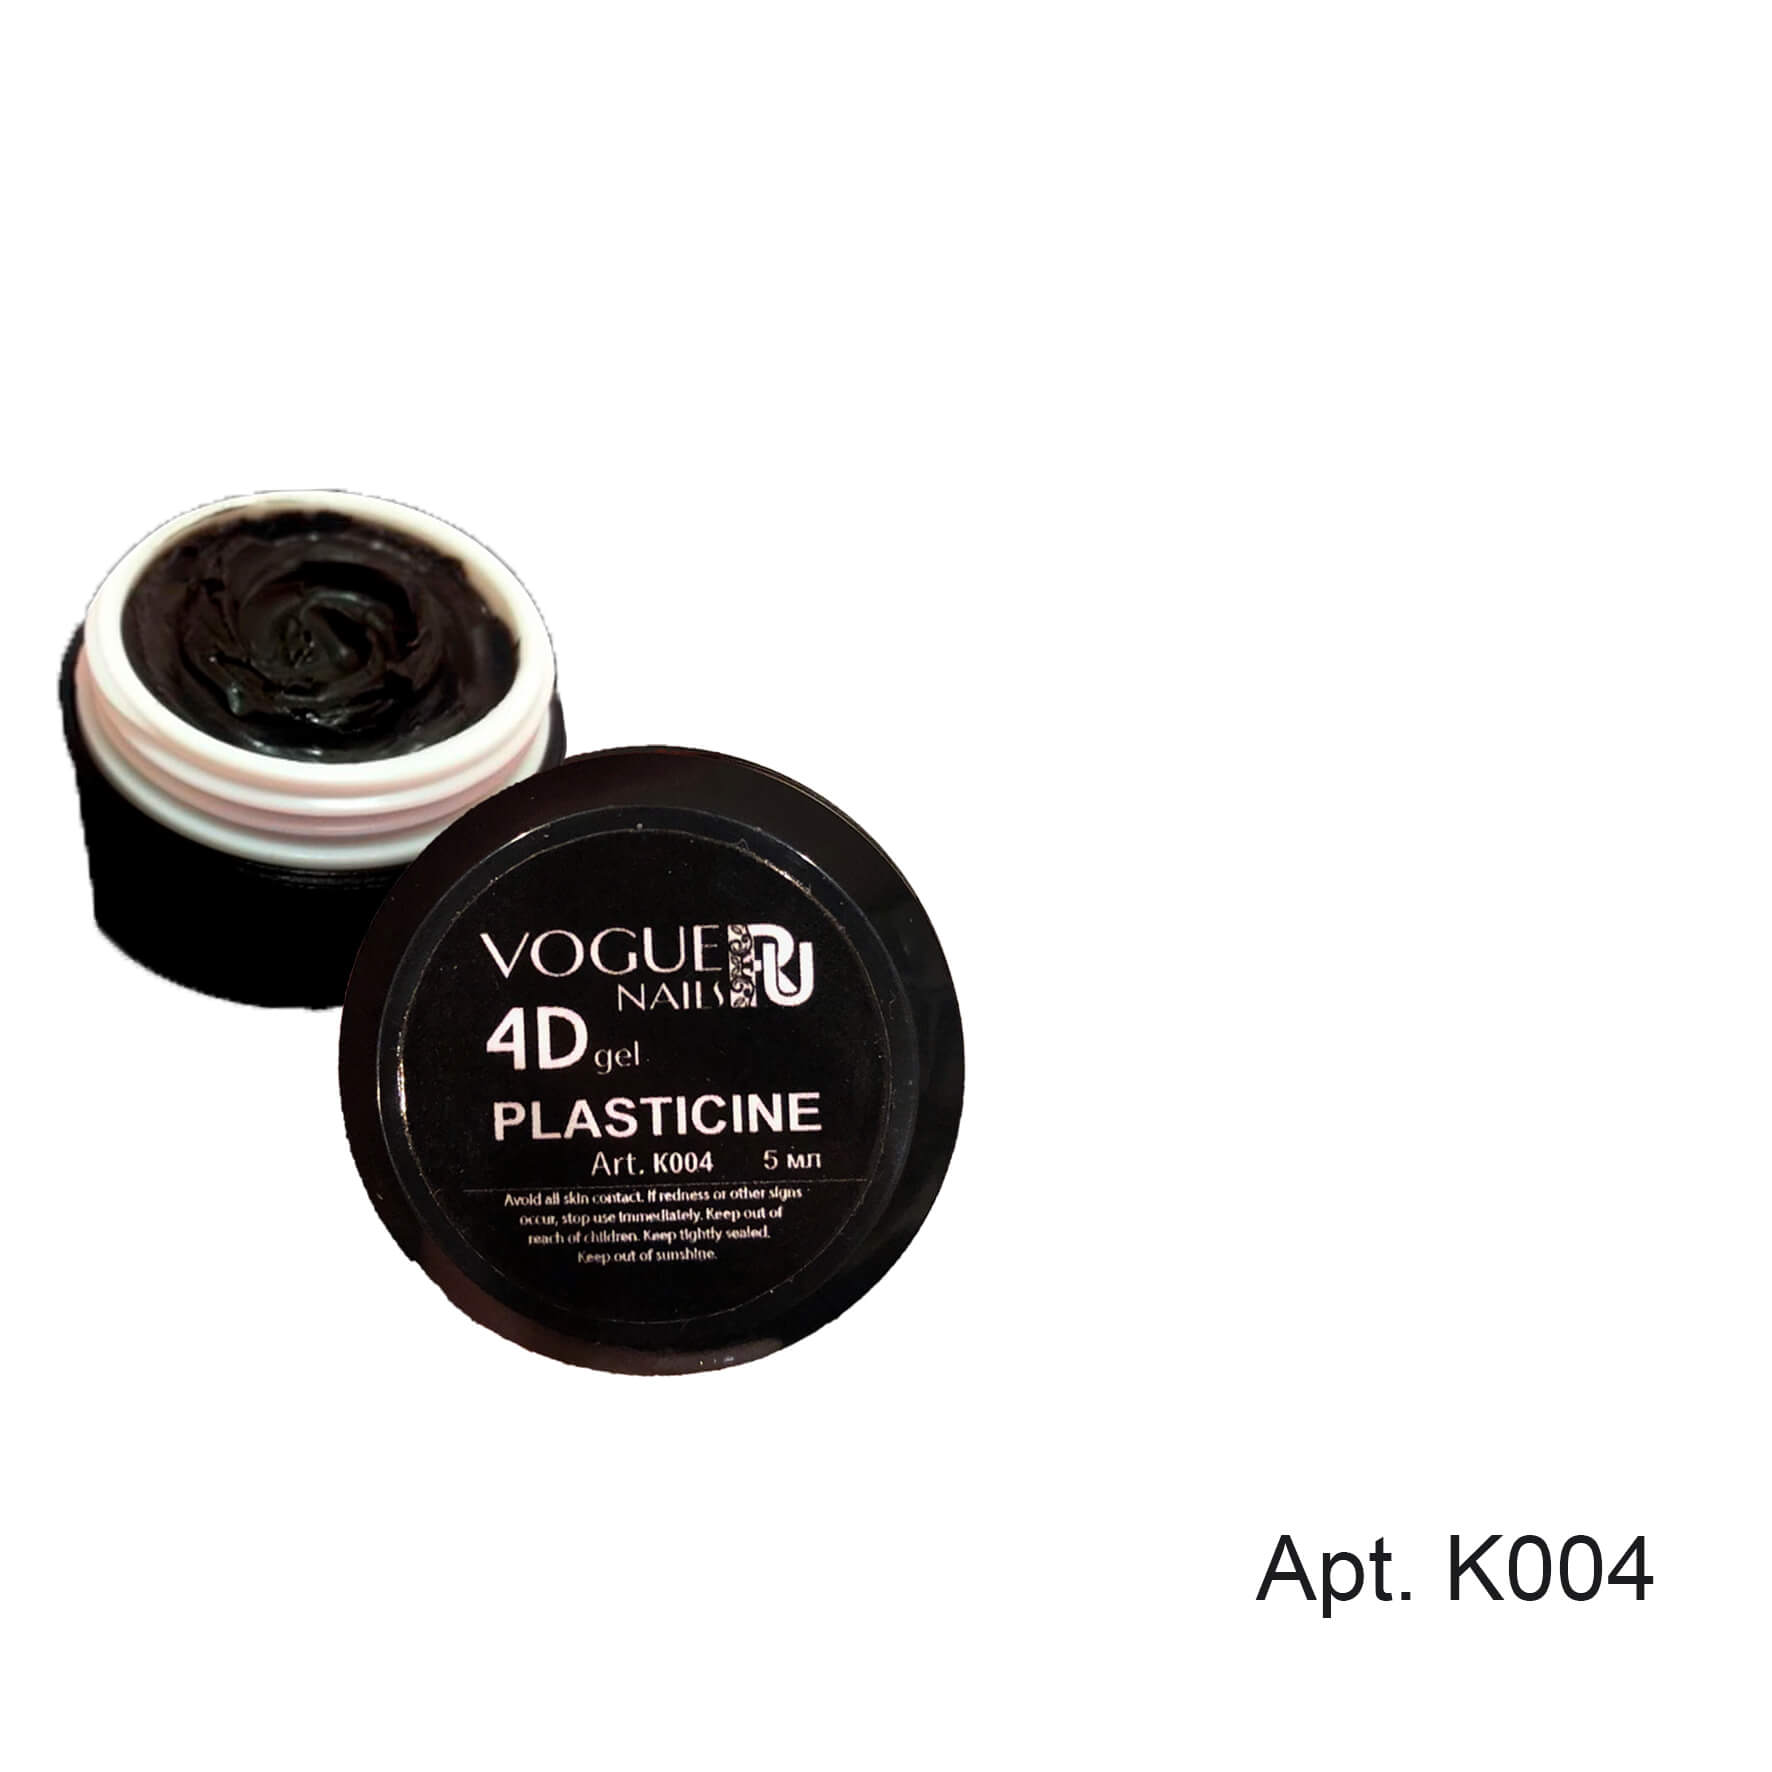 Vogue Nails 4D Gel Plasticine - Black